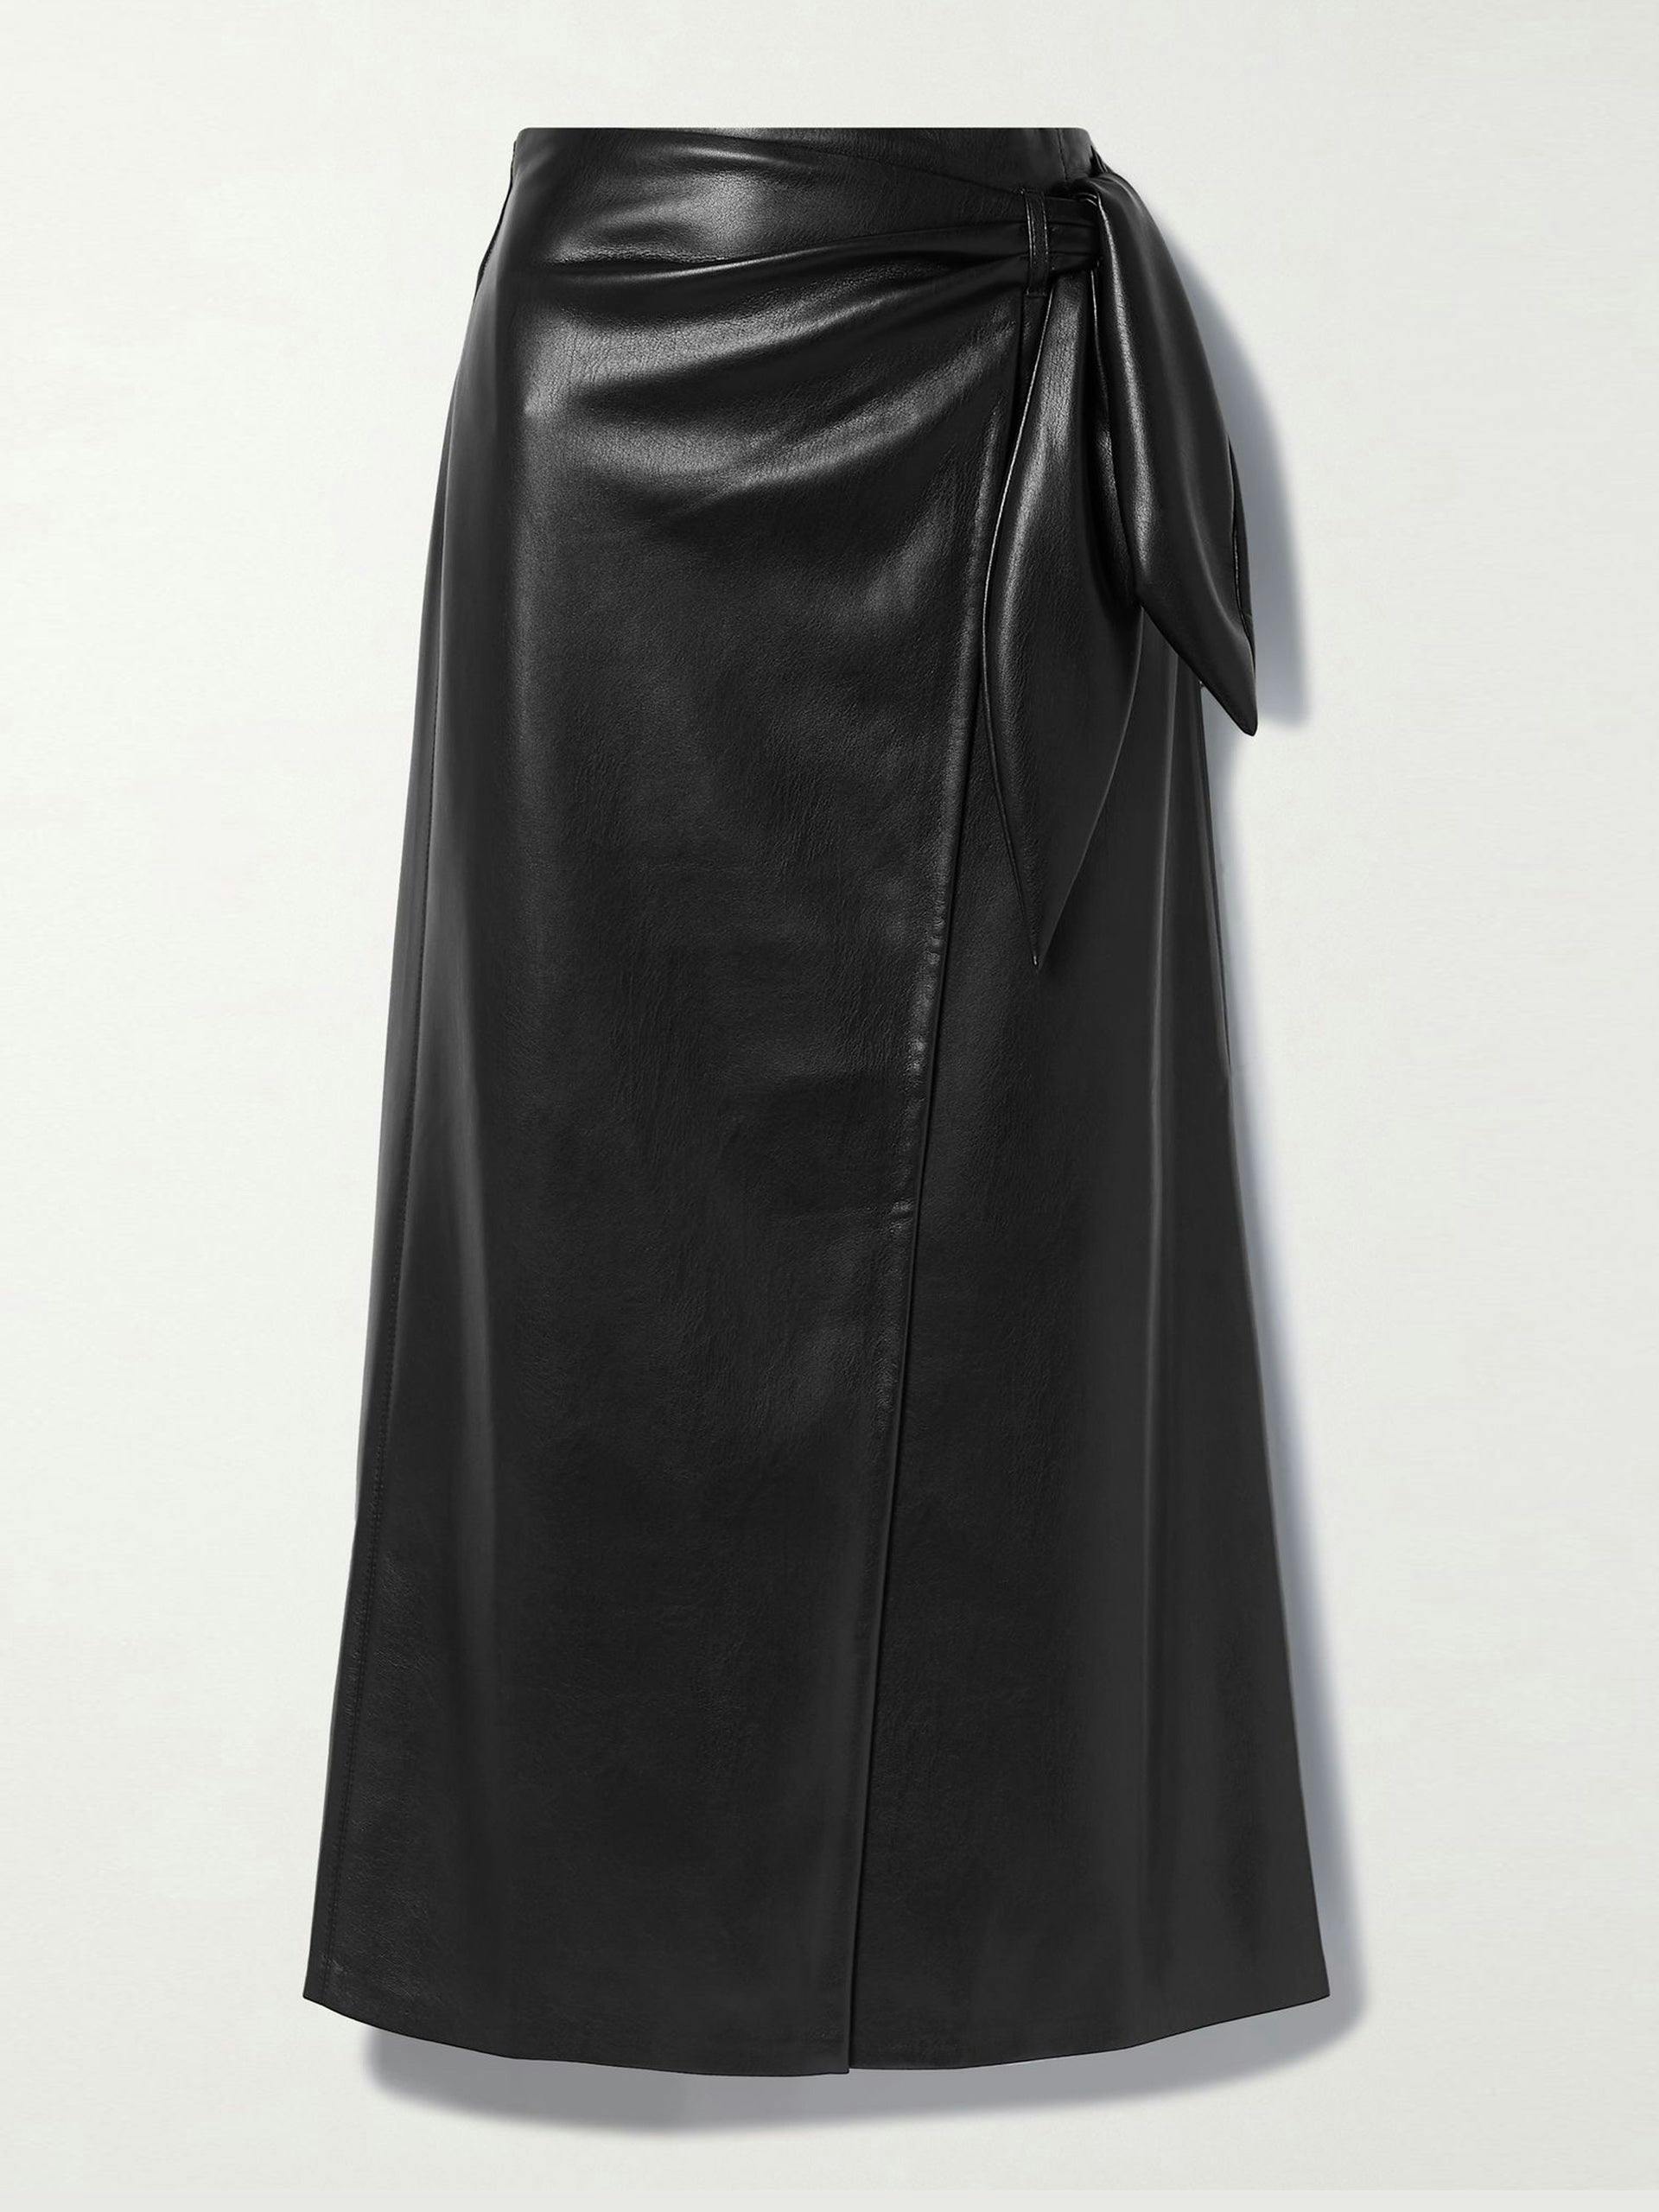 Black leather wrap skirt